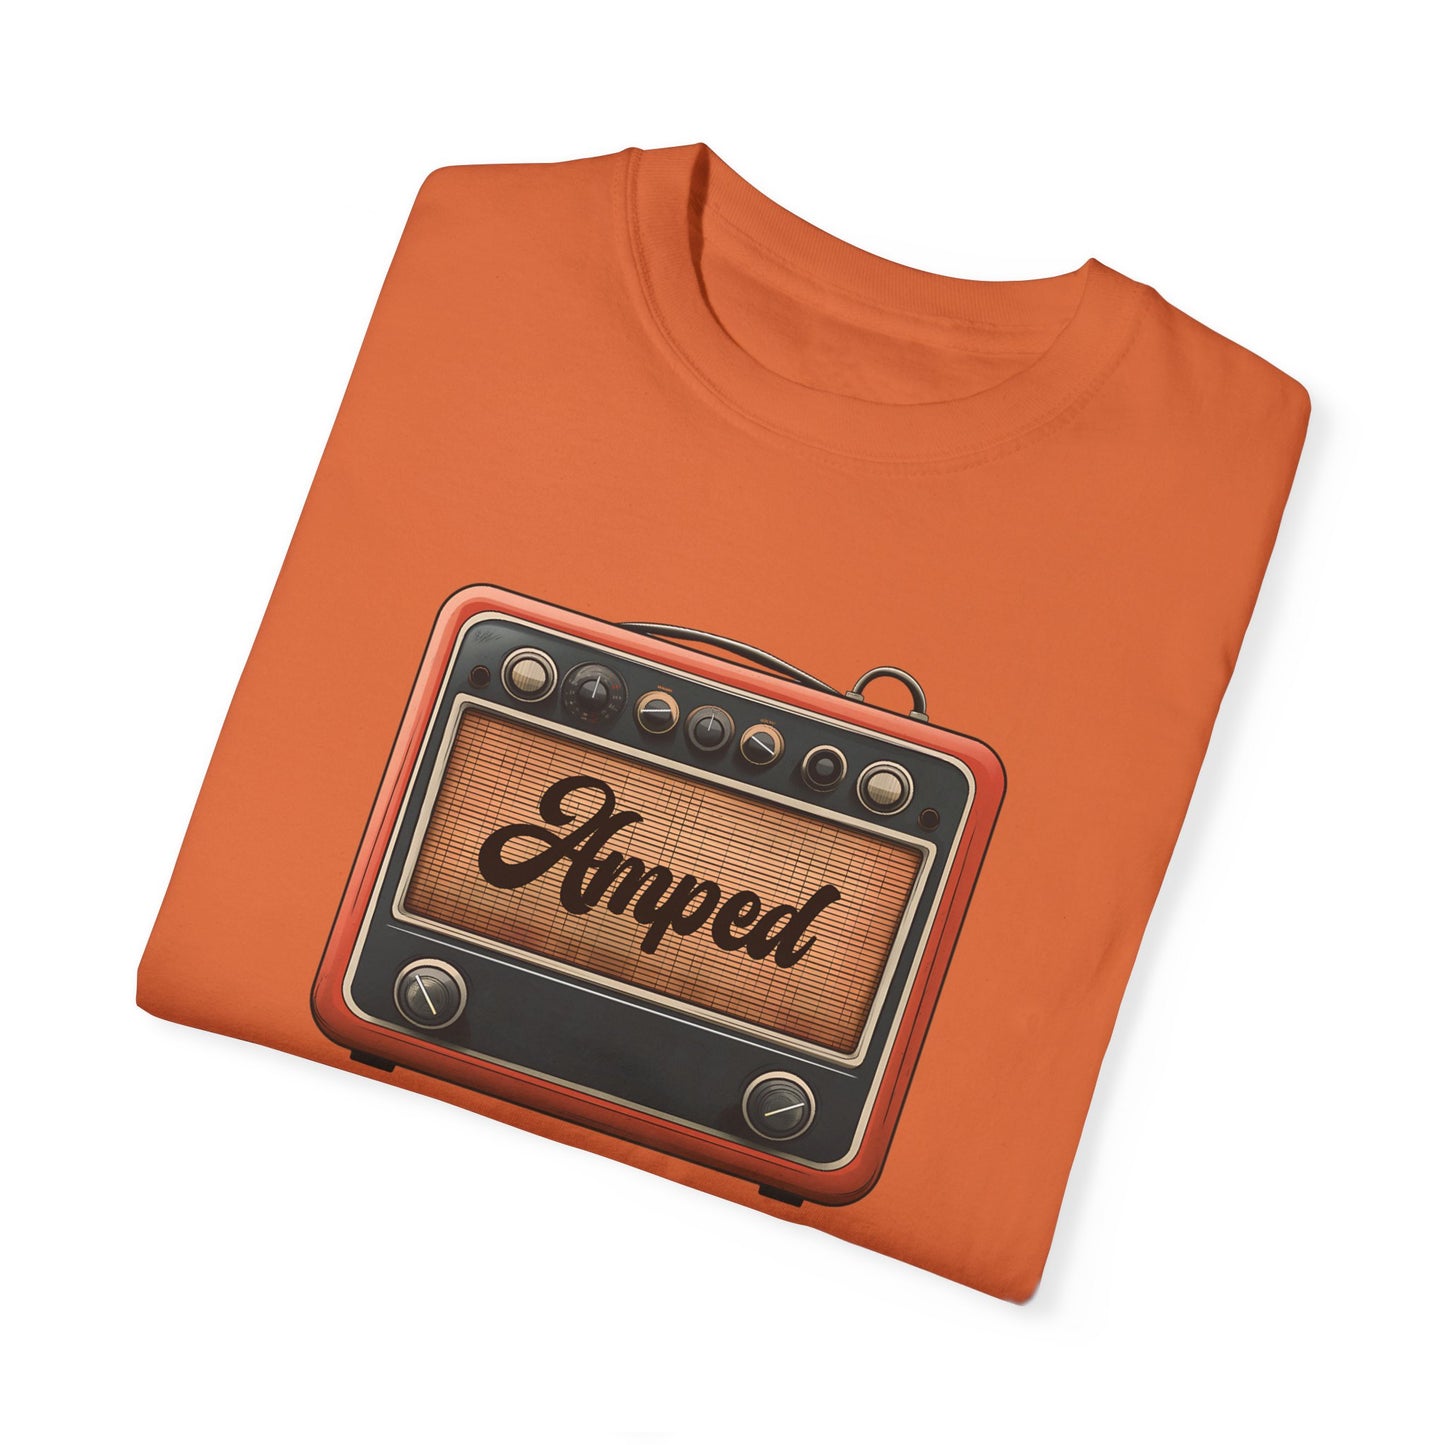 Amped Amplifier T-shirt